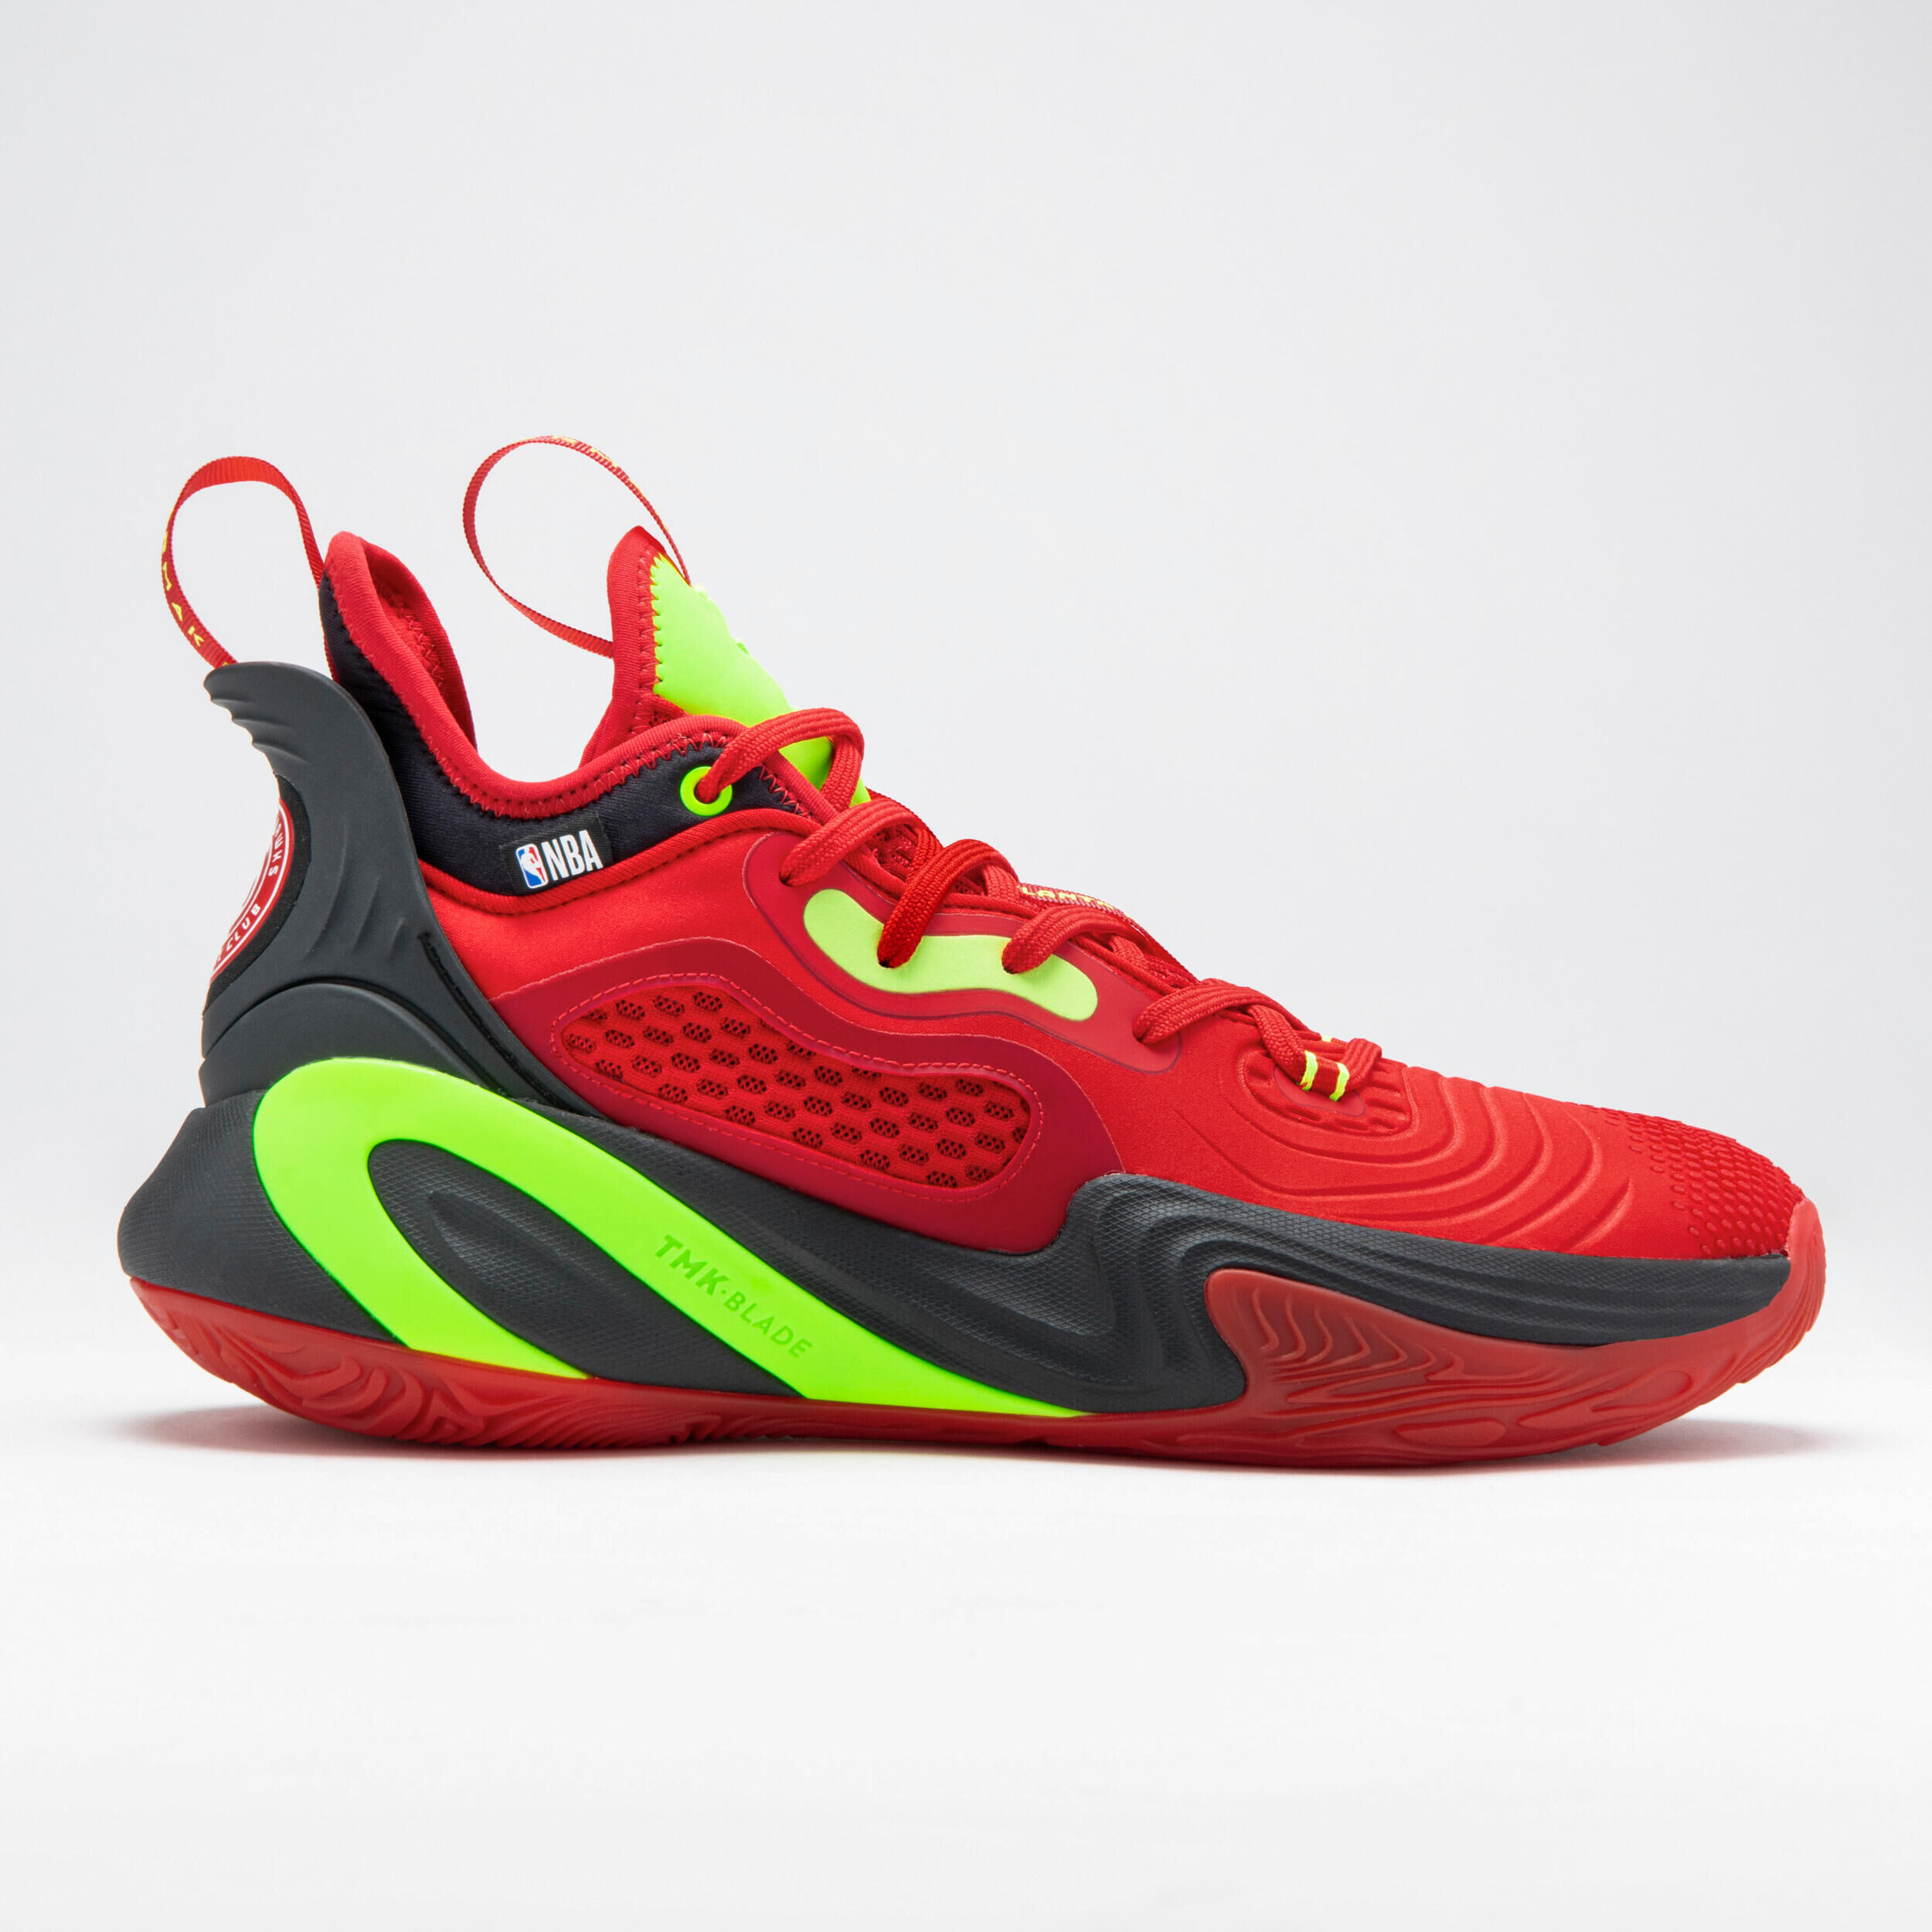 TARMAK Men's/Women's Basketball Shoes SE900 - NBA Atlanta Hawks/Red